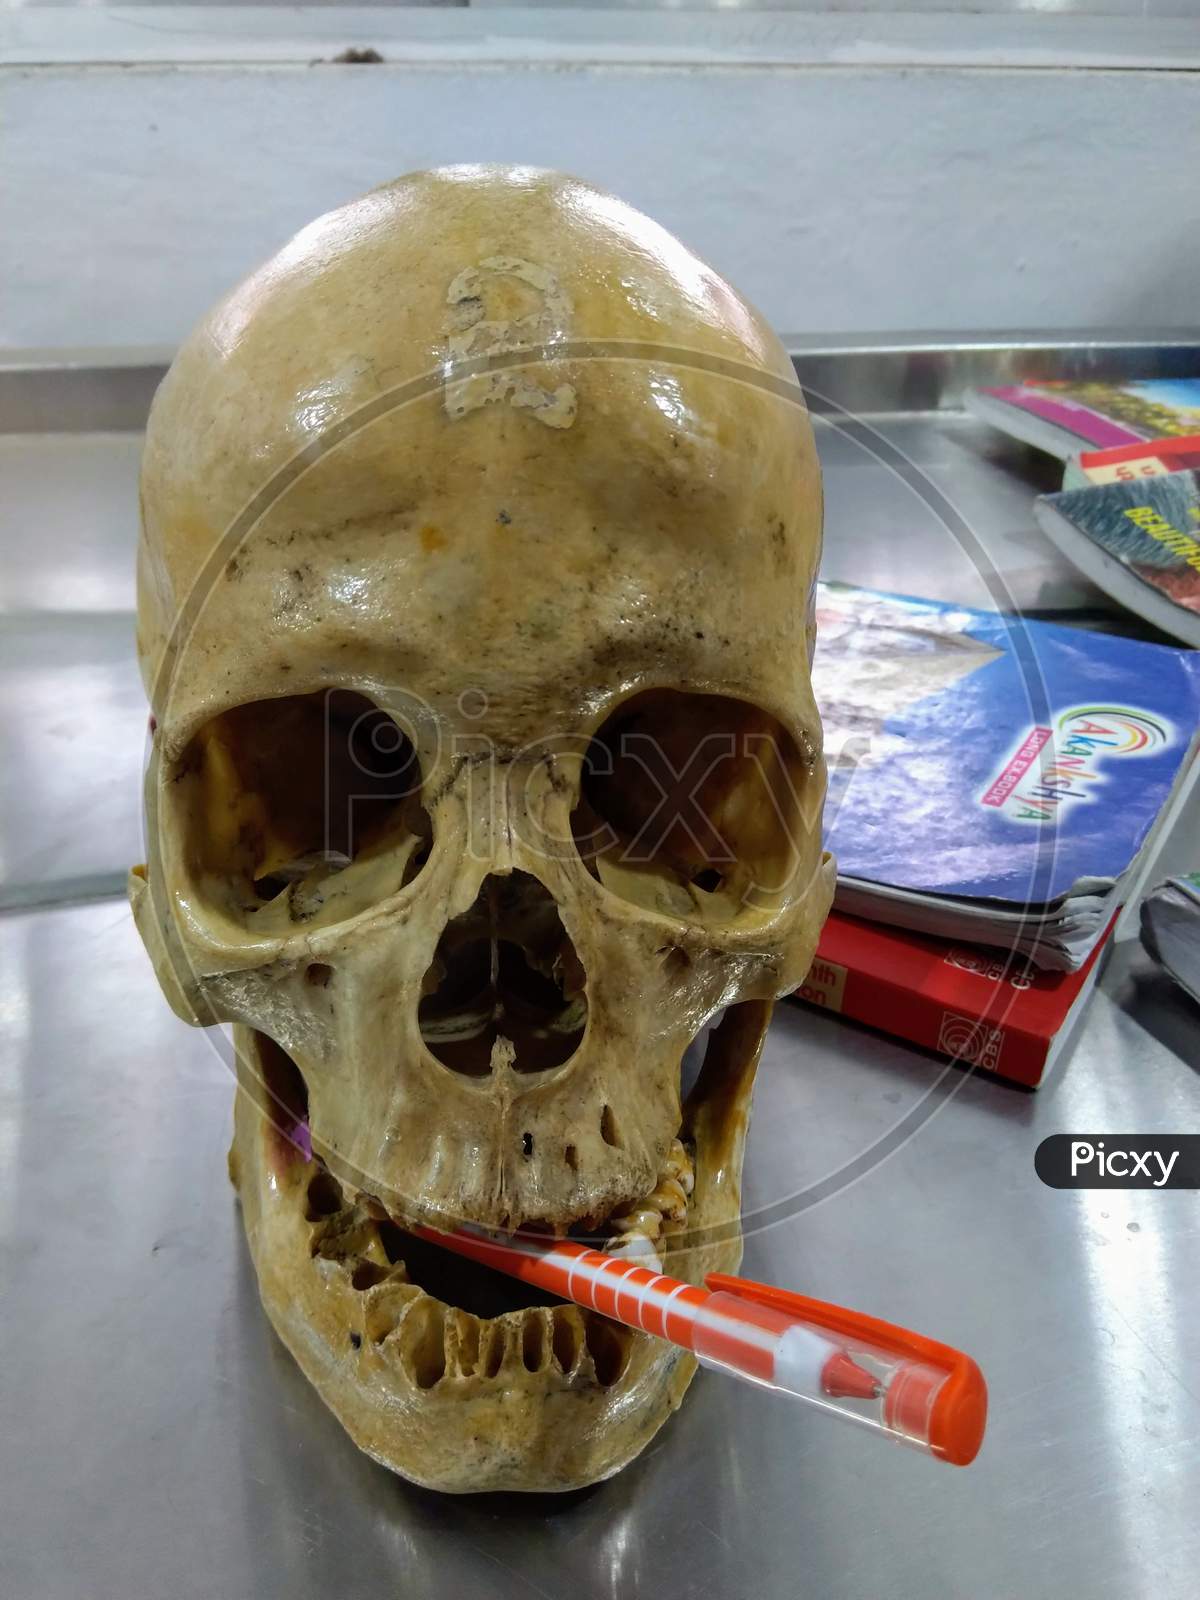 Human Skull bone looking Cool at a lab